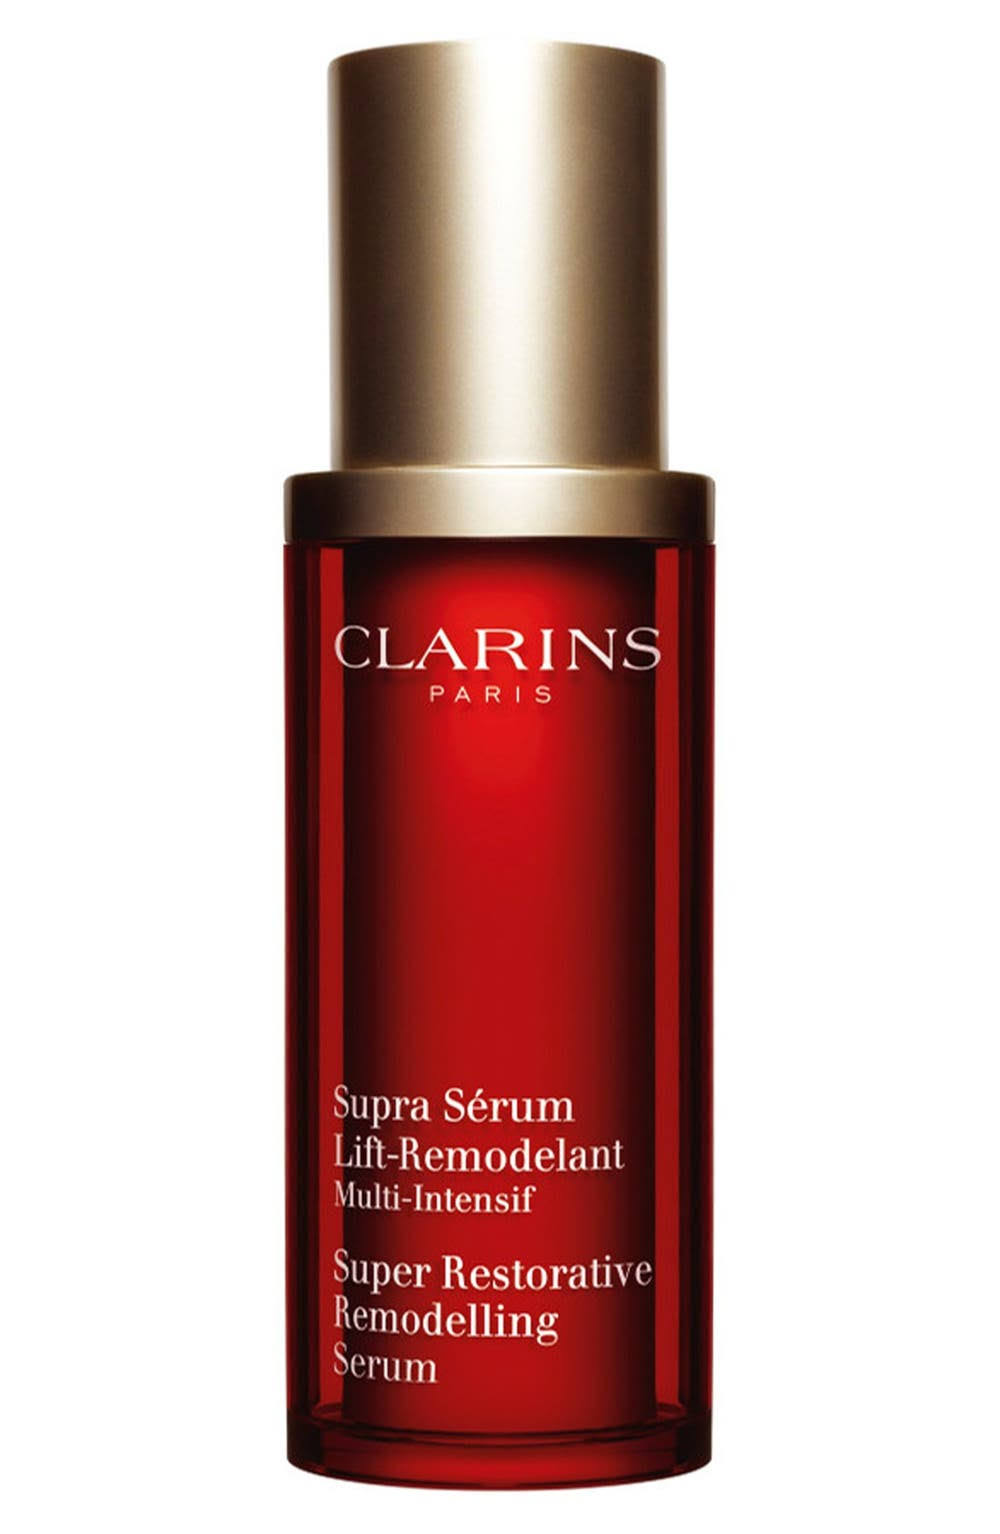 Clarins Super Restorative Serum - 30ml